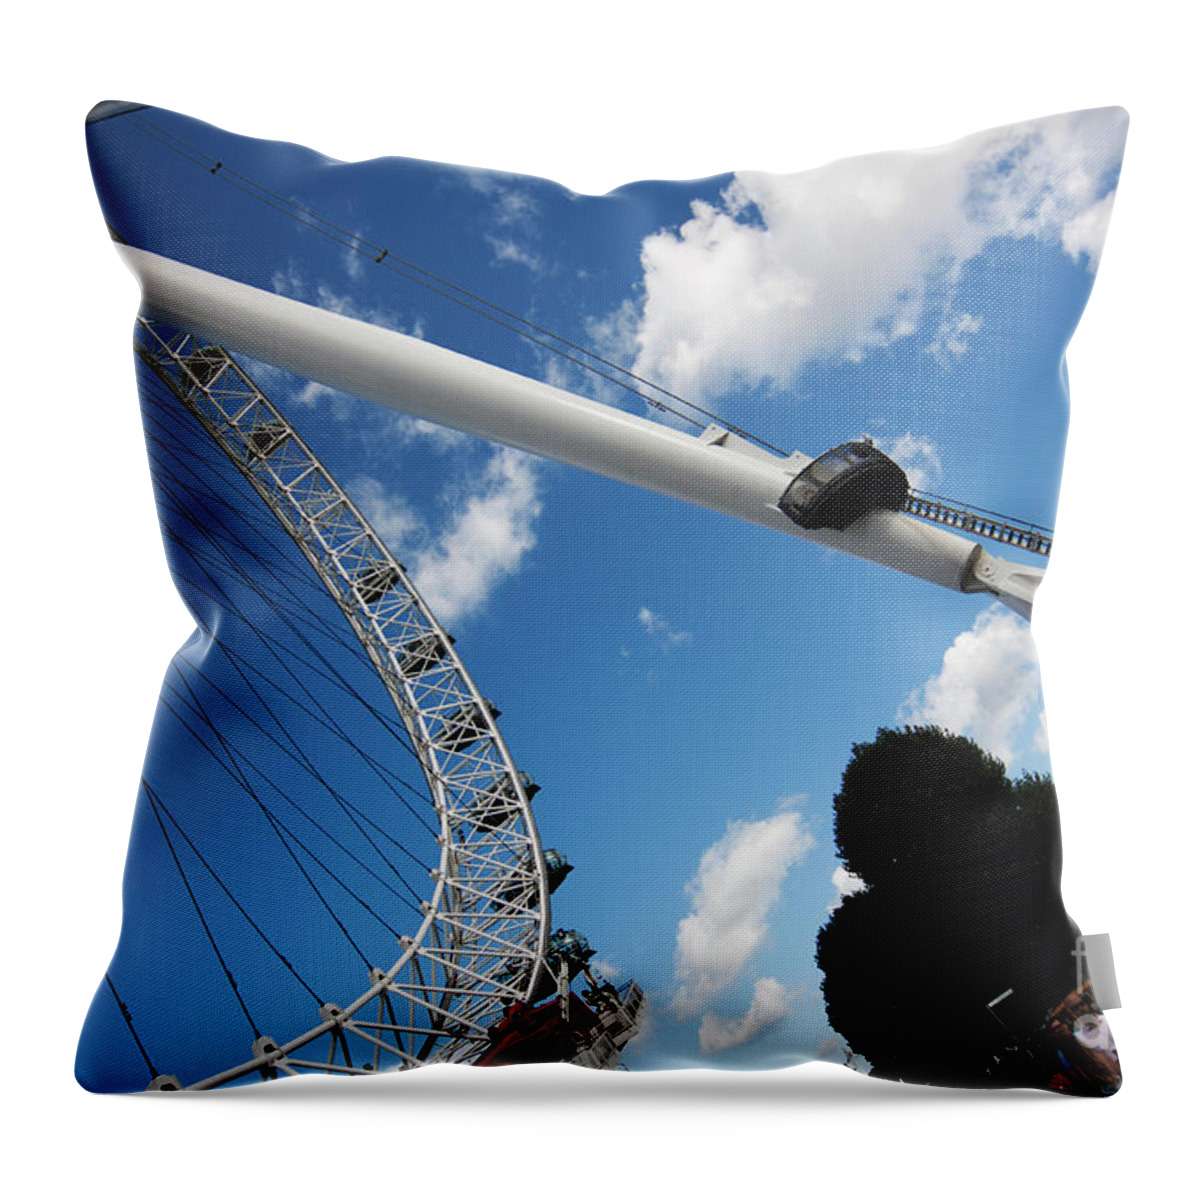 Pillar Throw Pillow featuring the photograph Pillar of London s ferris wheel by Agusti Pardo Rossello